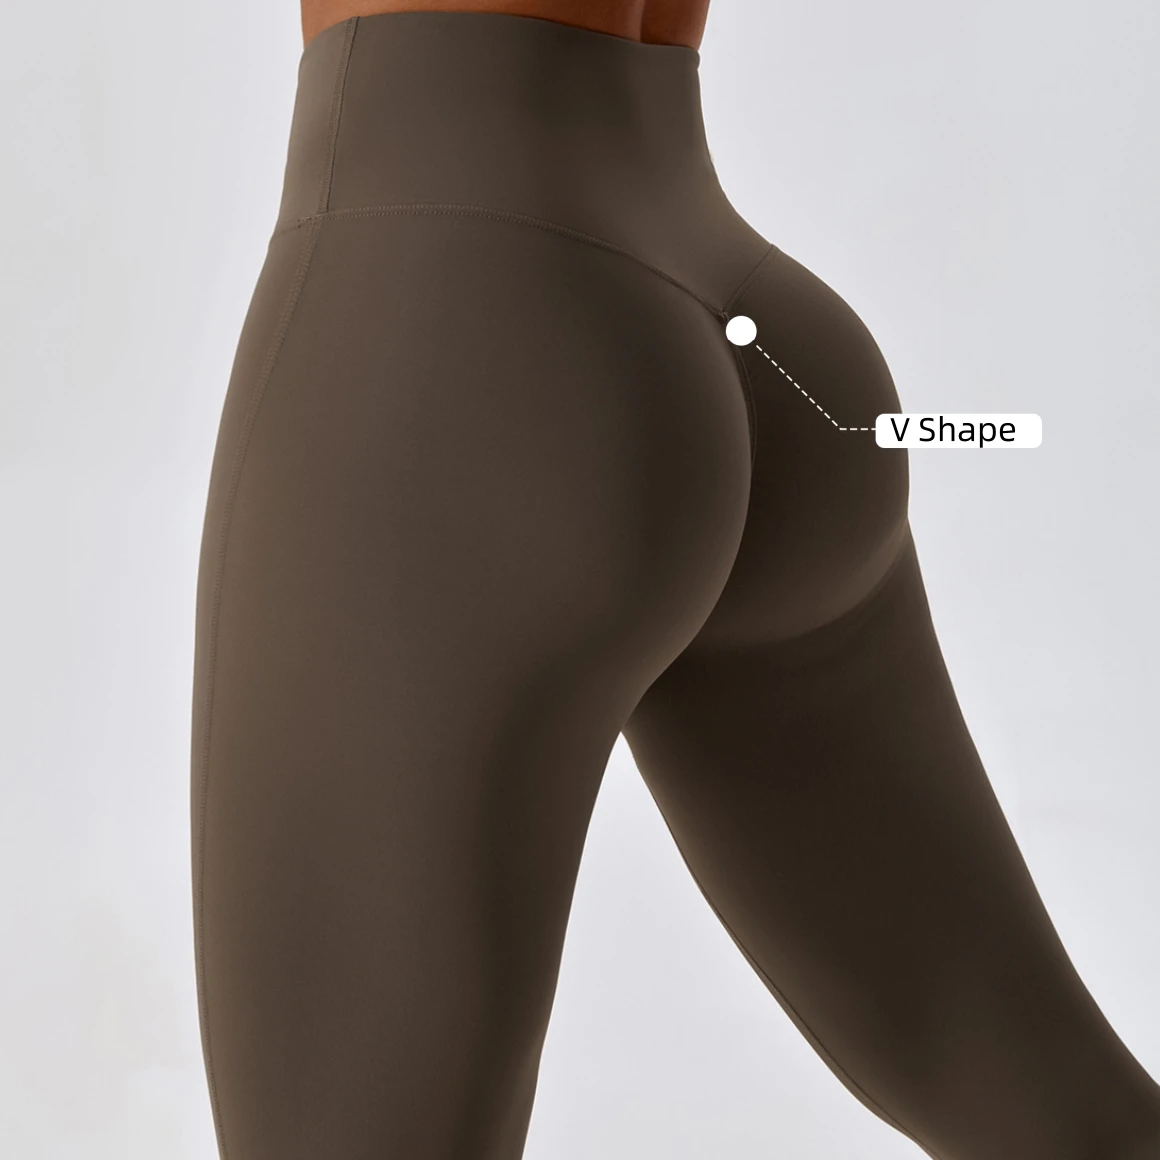 

High Quality V Shape Leggings For Women High Waisted Scrunch Butt Lifting Workout Running Yoga Buttery Soft Pants